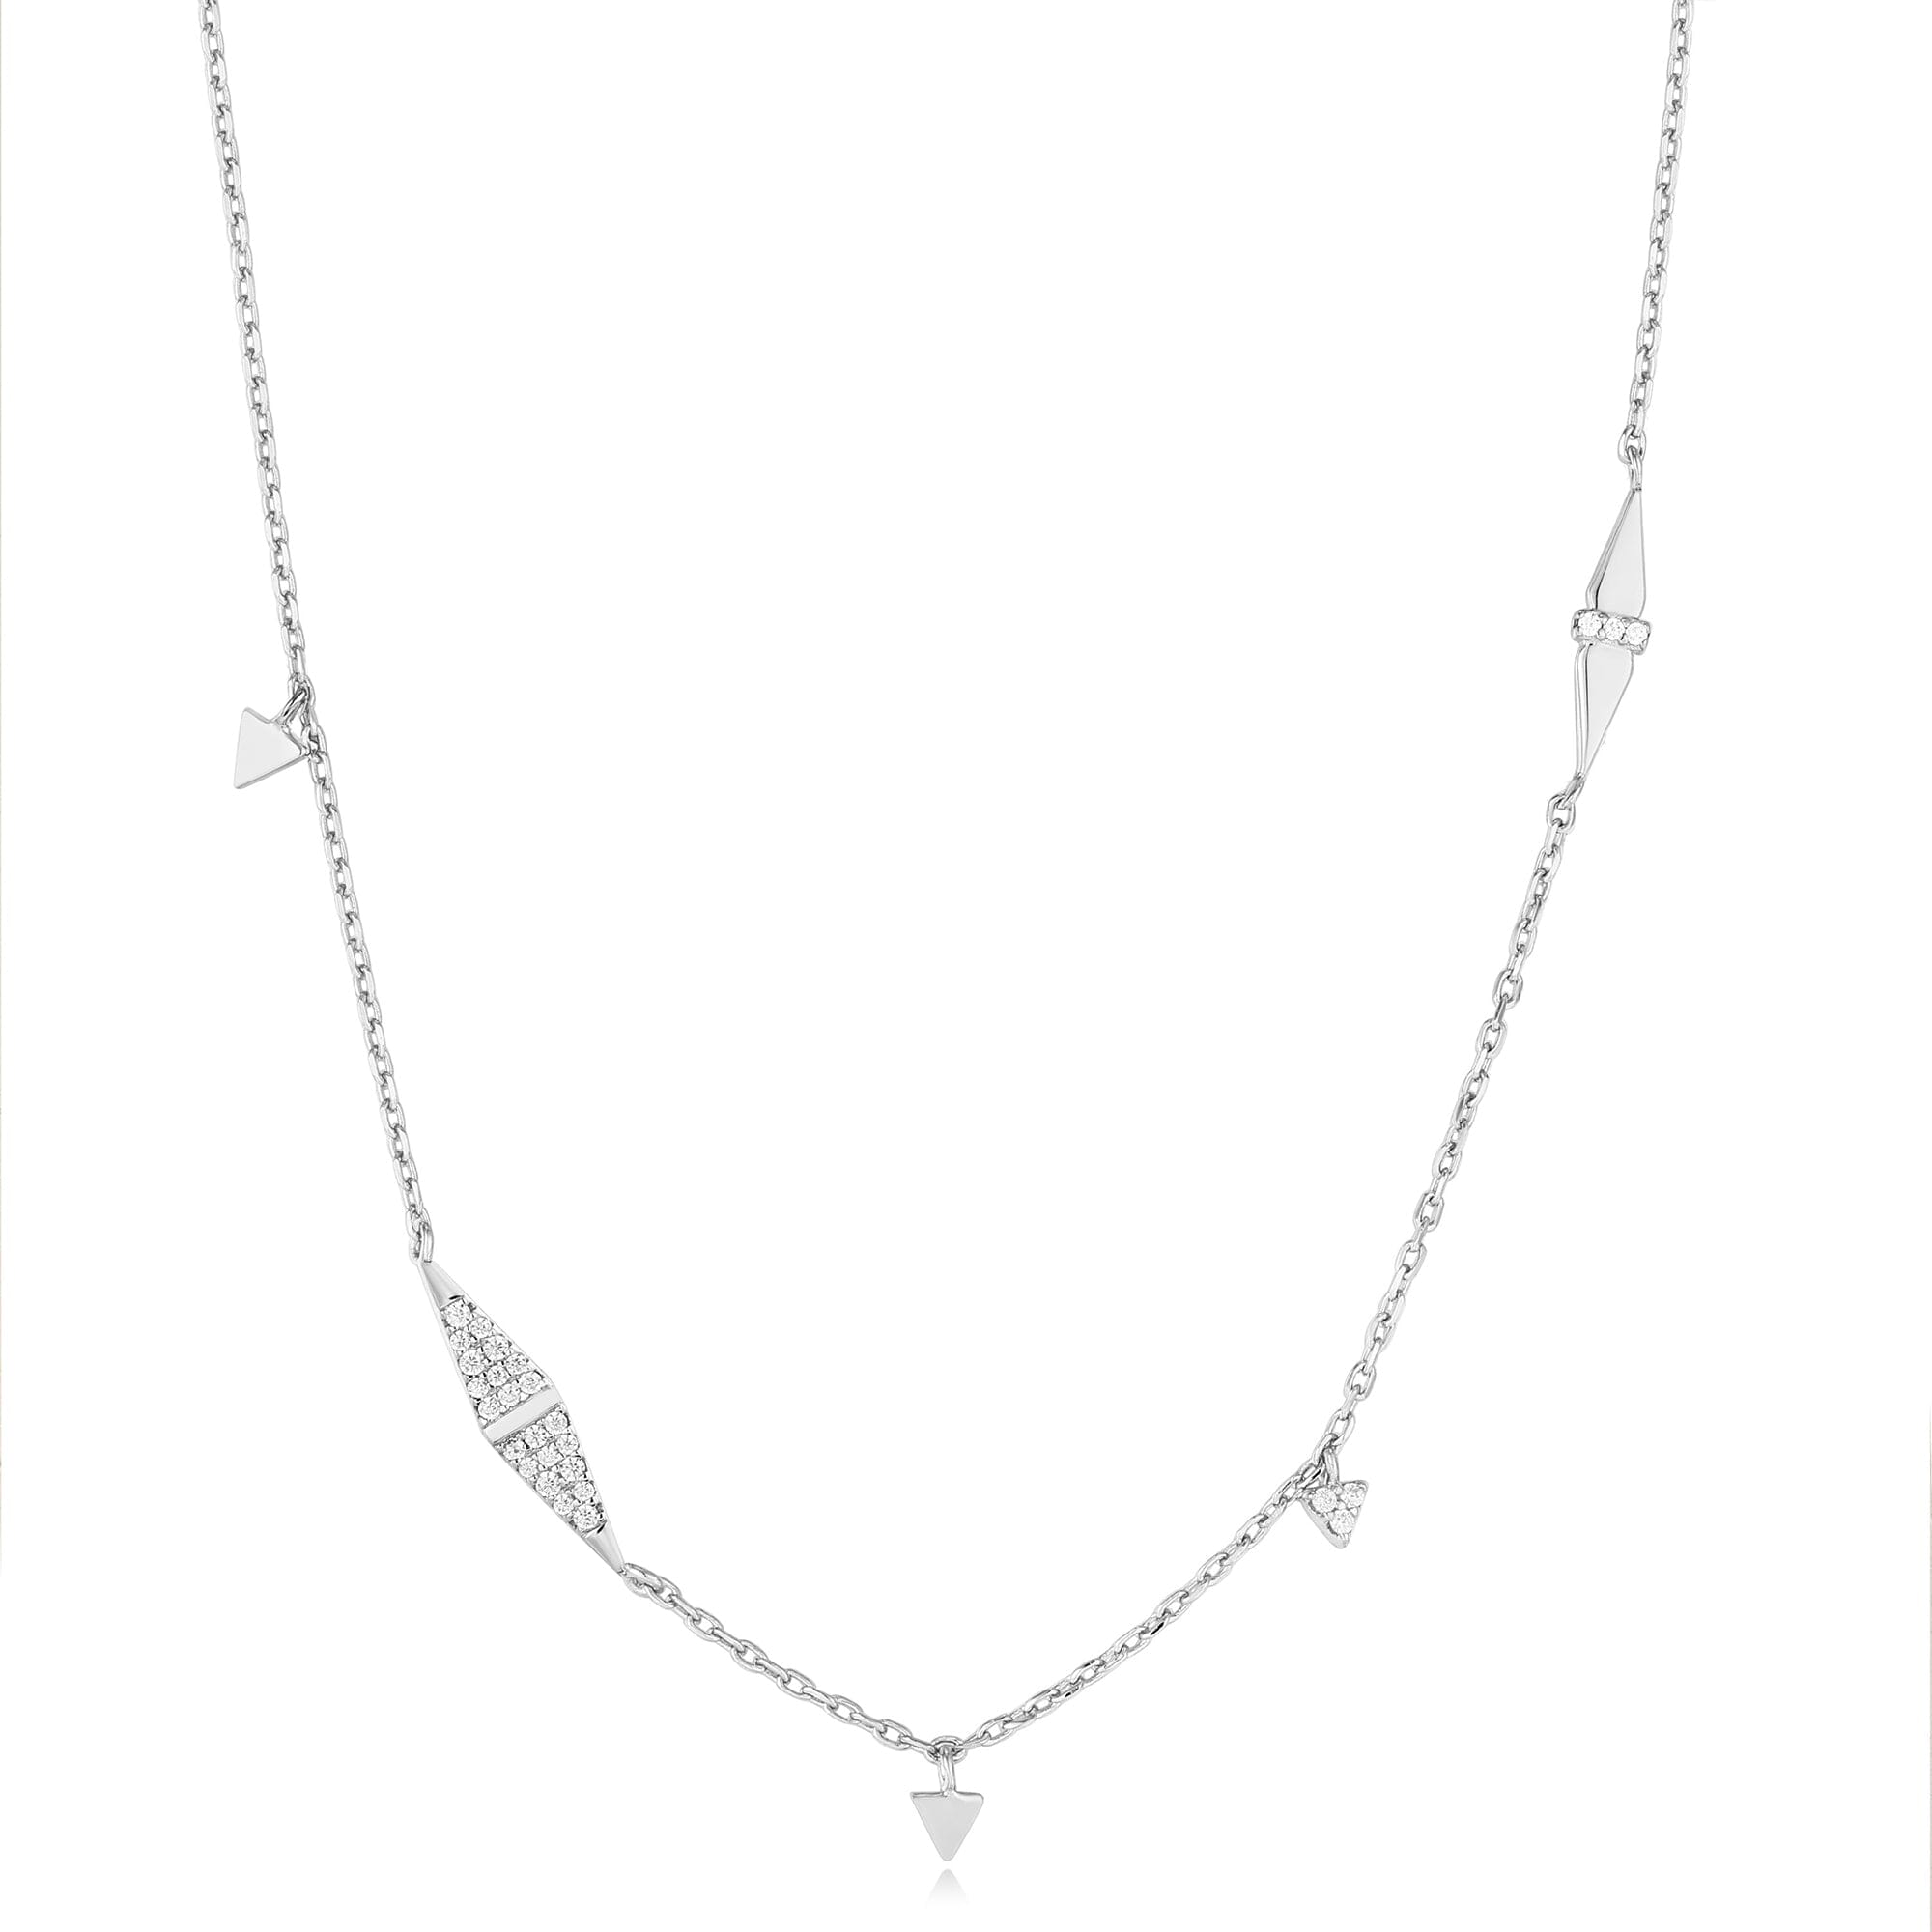 Ania Haie Silver Geometric Sparkle Chain Necklaces Necklaces Ania Haie 